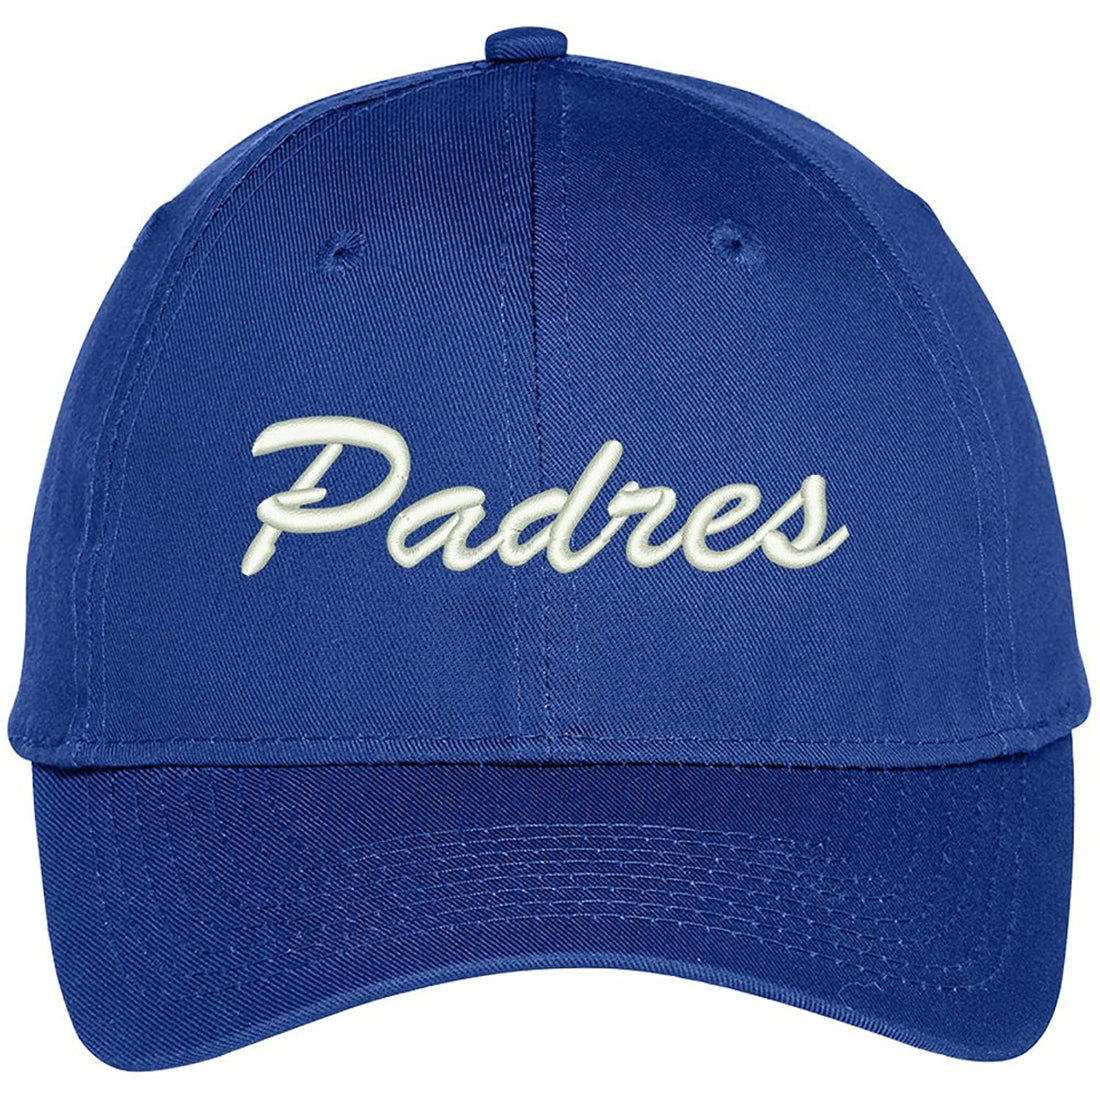 Trendy Apparel Shop Padres Embroidered Precurved Adjustable Cap